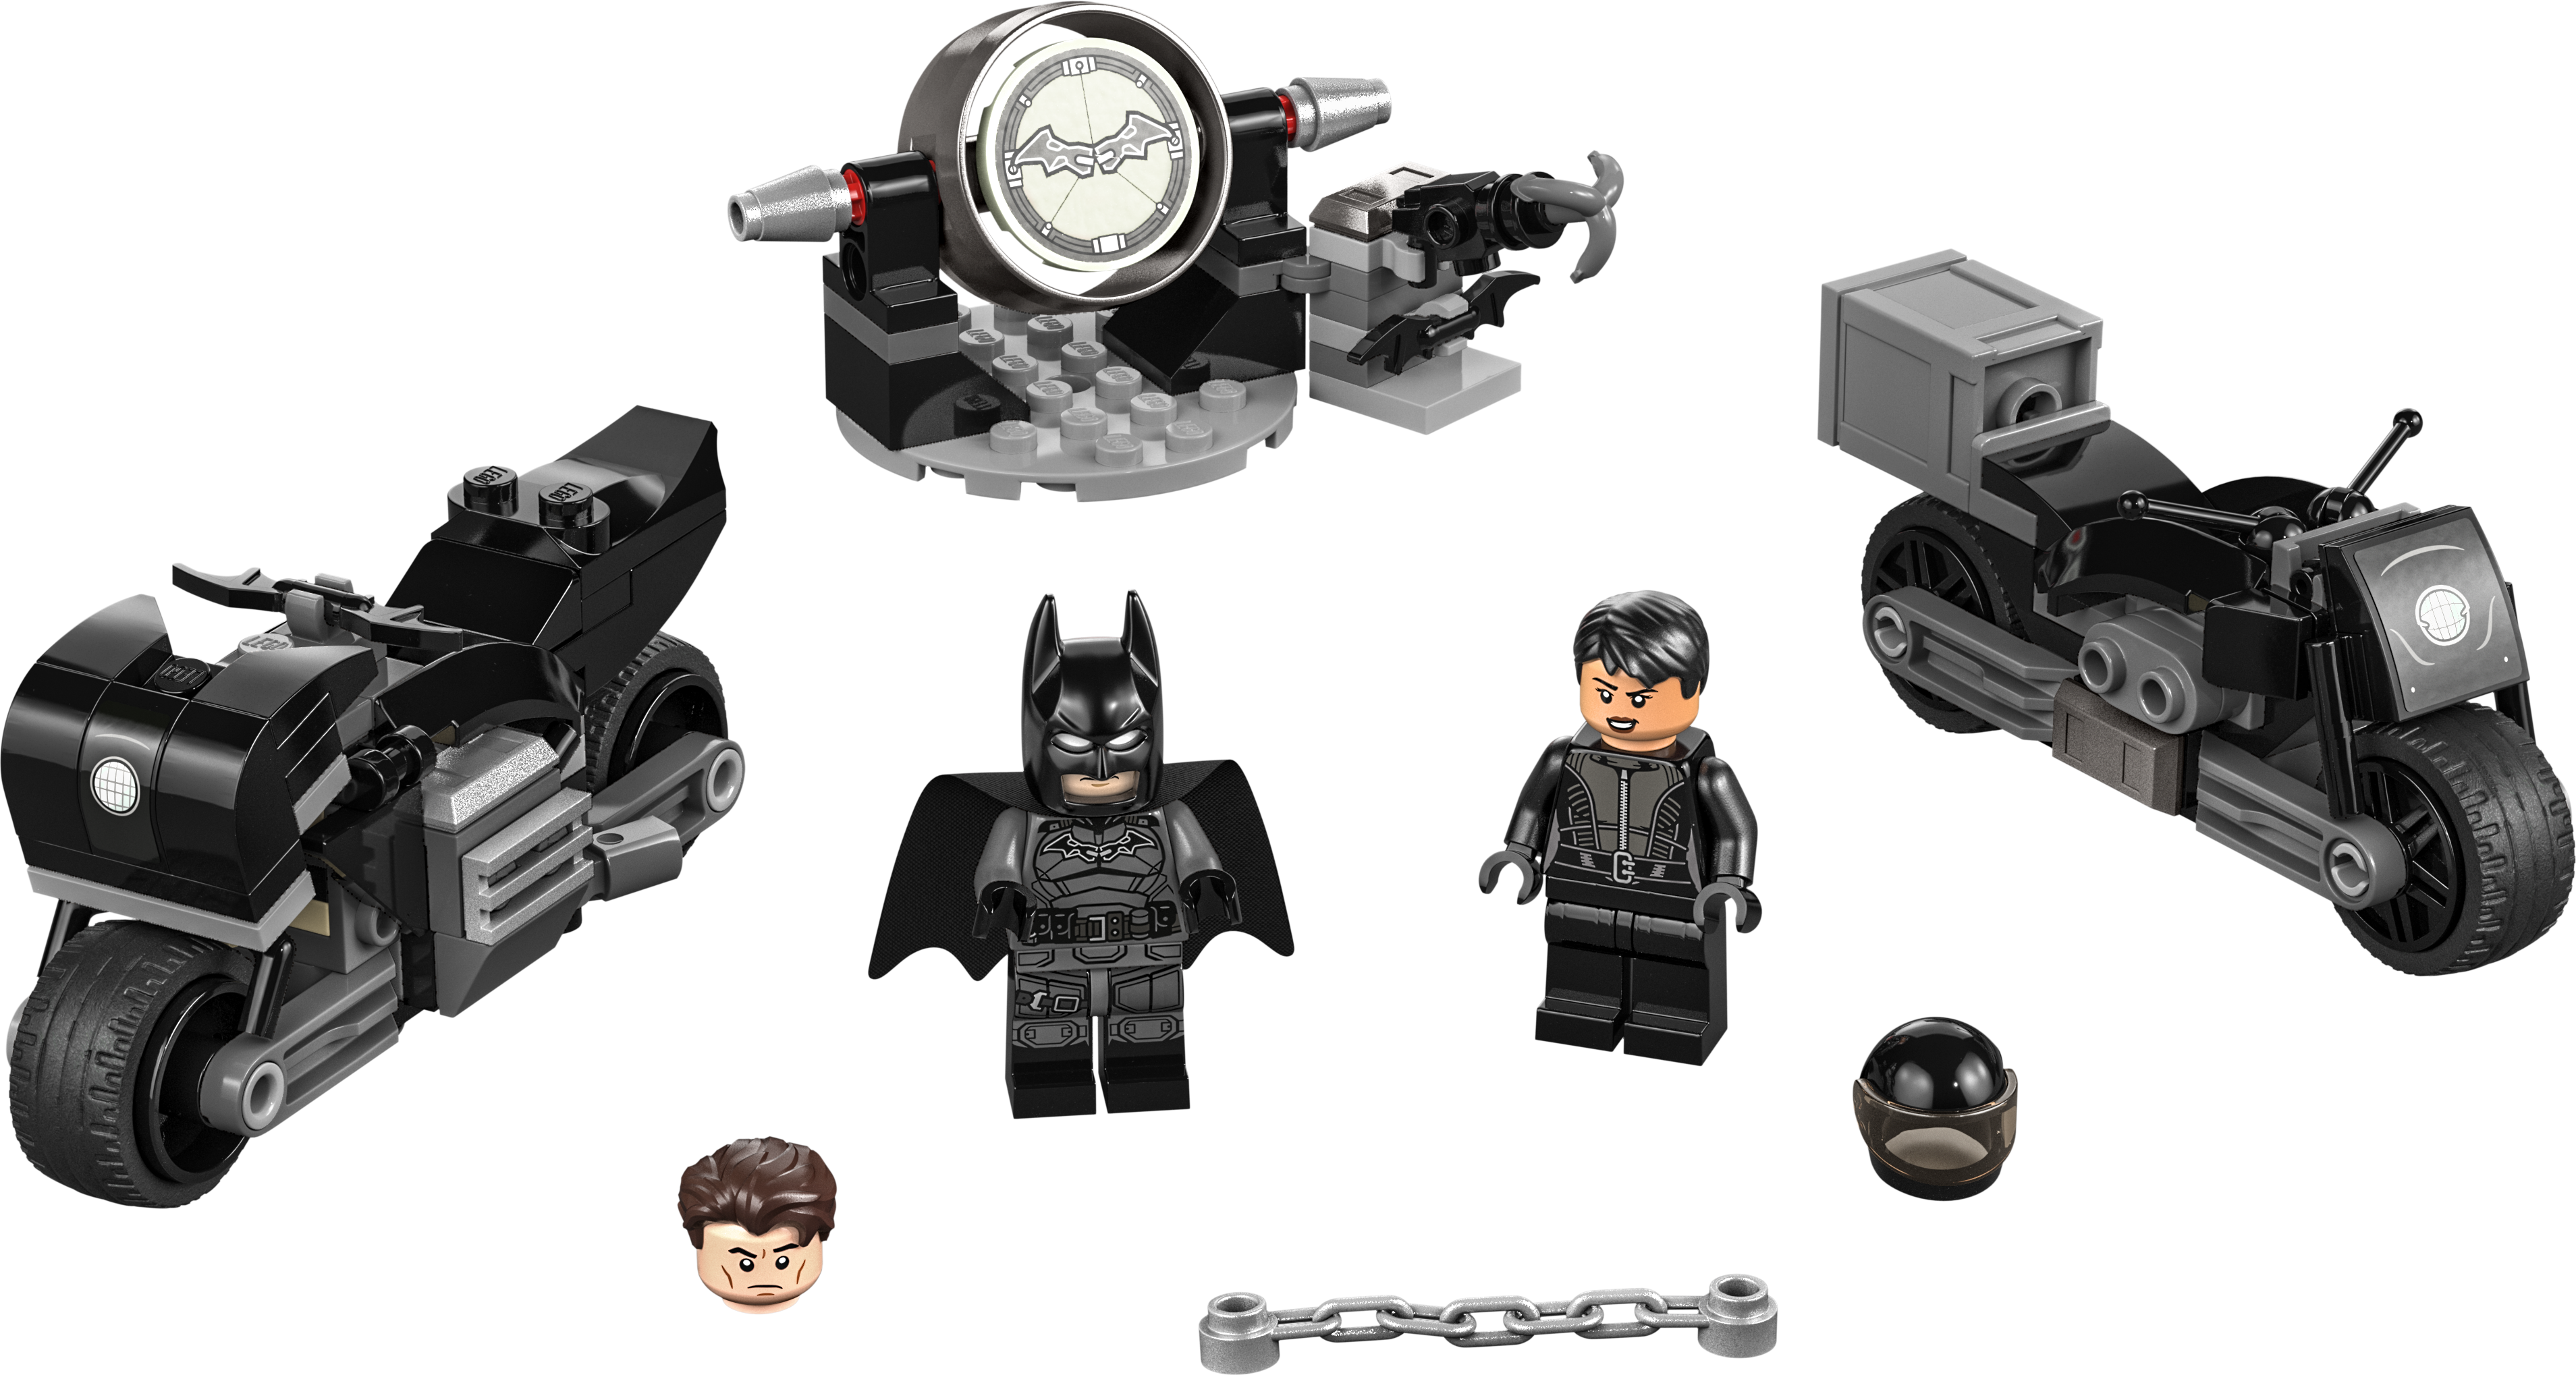 LEGO DC Superheroes: Batman Minifigure with Jet Ski and Bat-a-Rang 